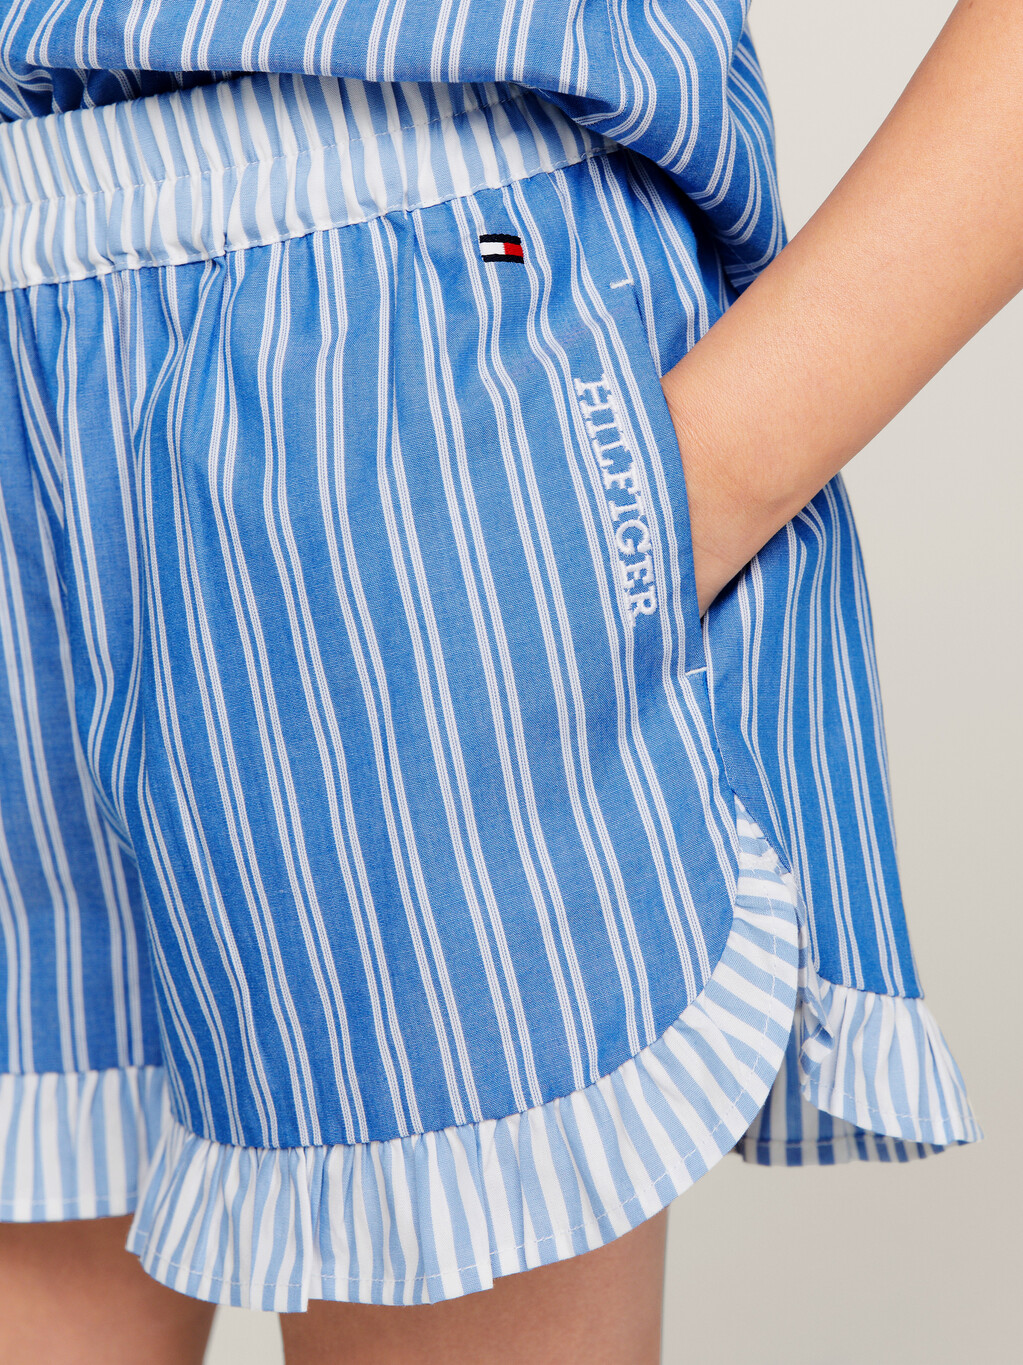 Stripe Ruffle Relaxed Shorts, Blue Spell Stripe / White, hi-res